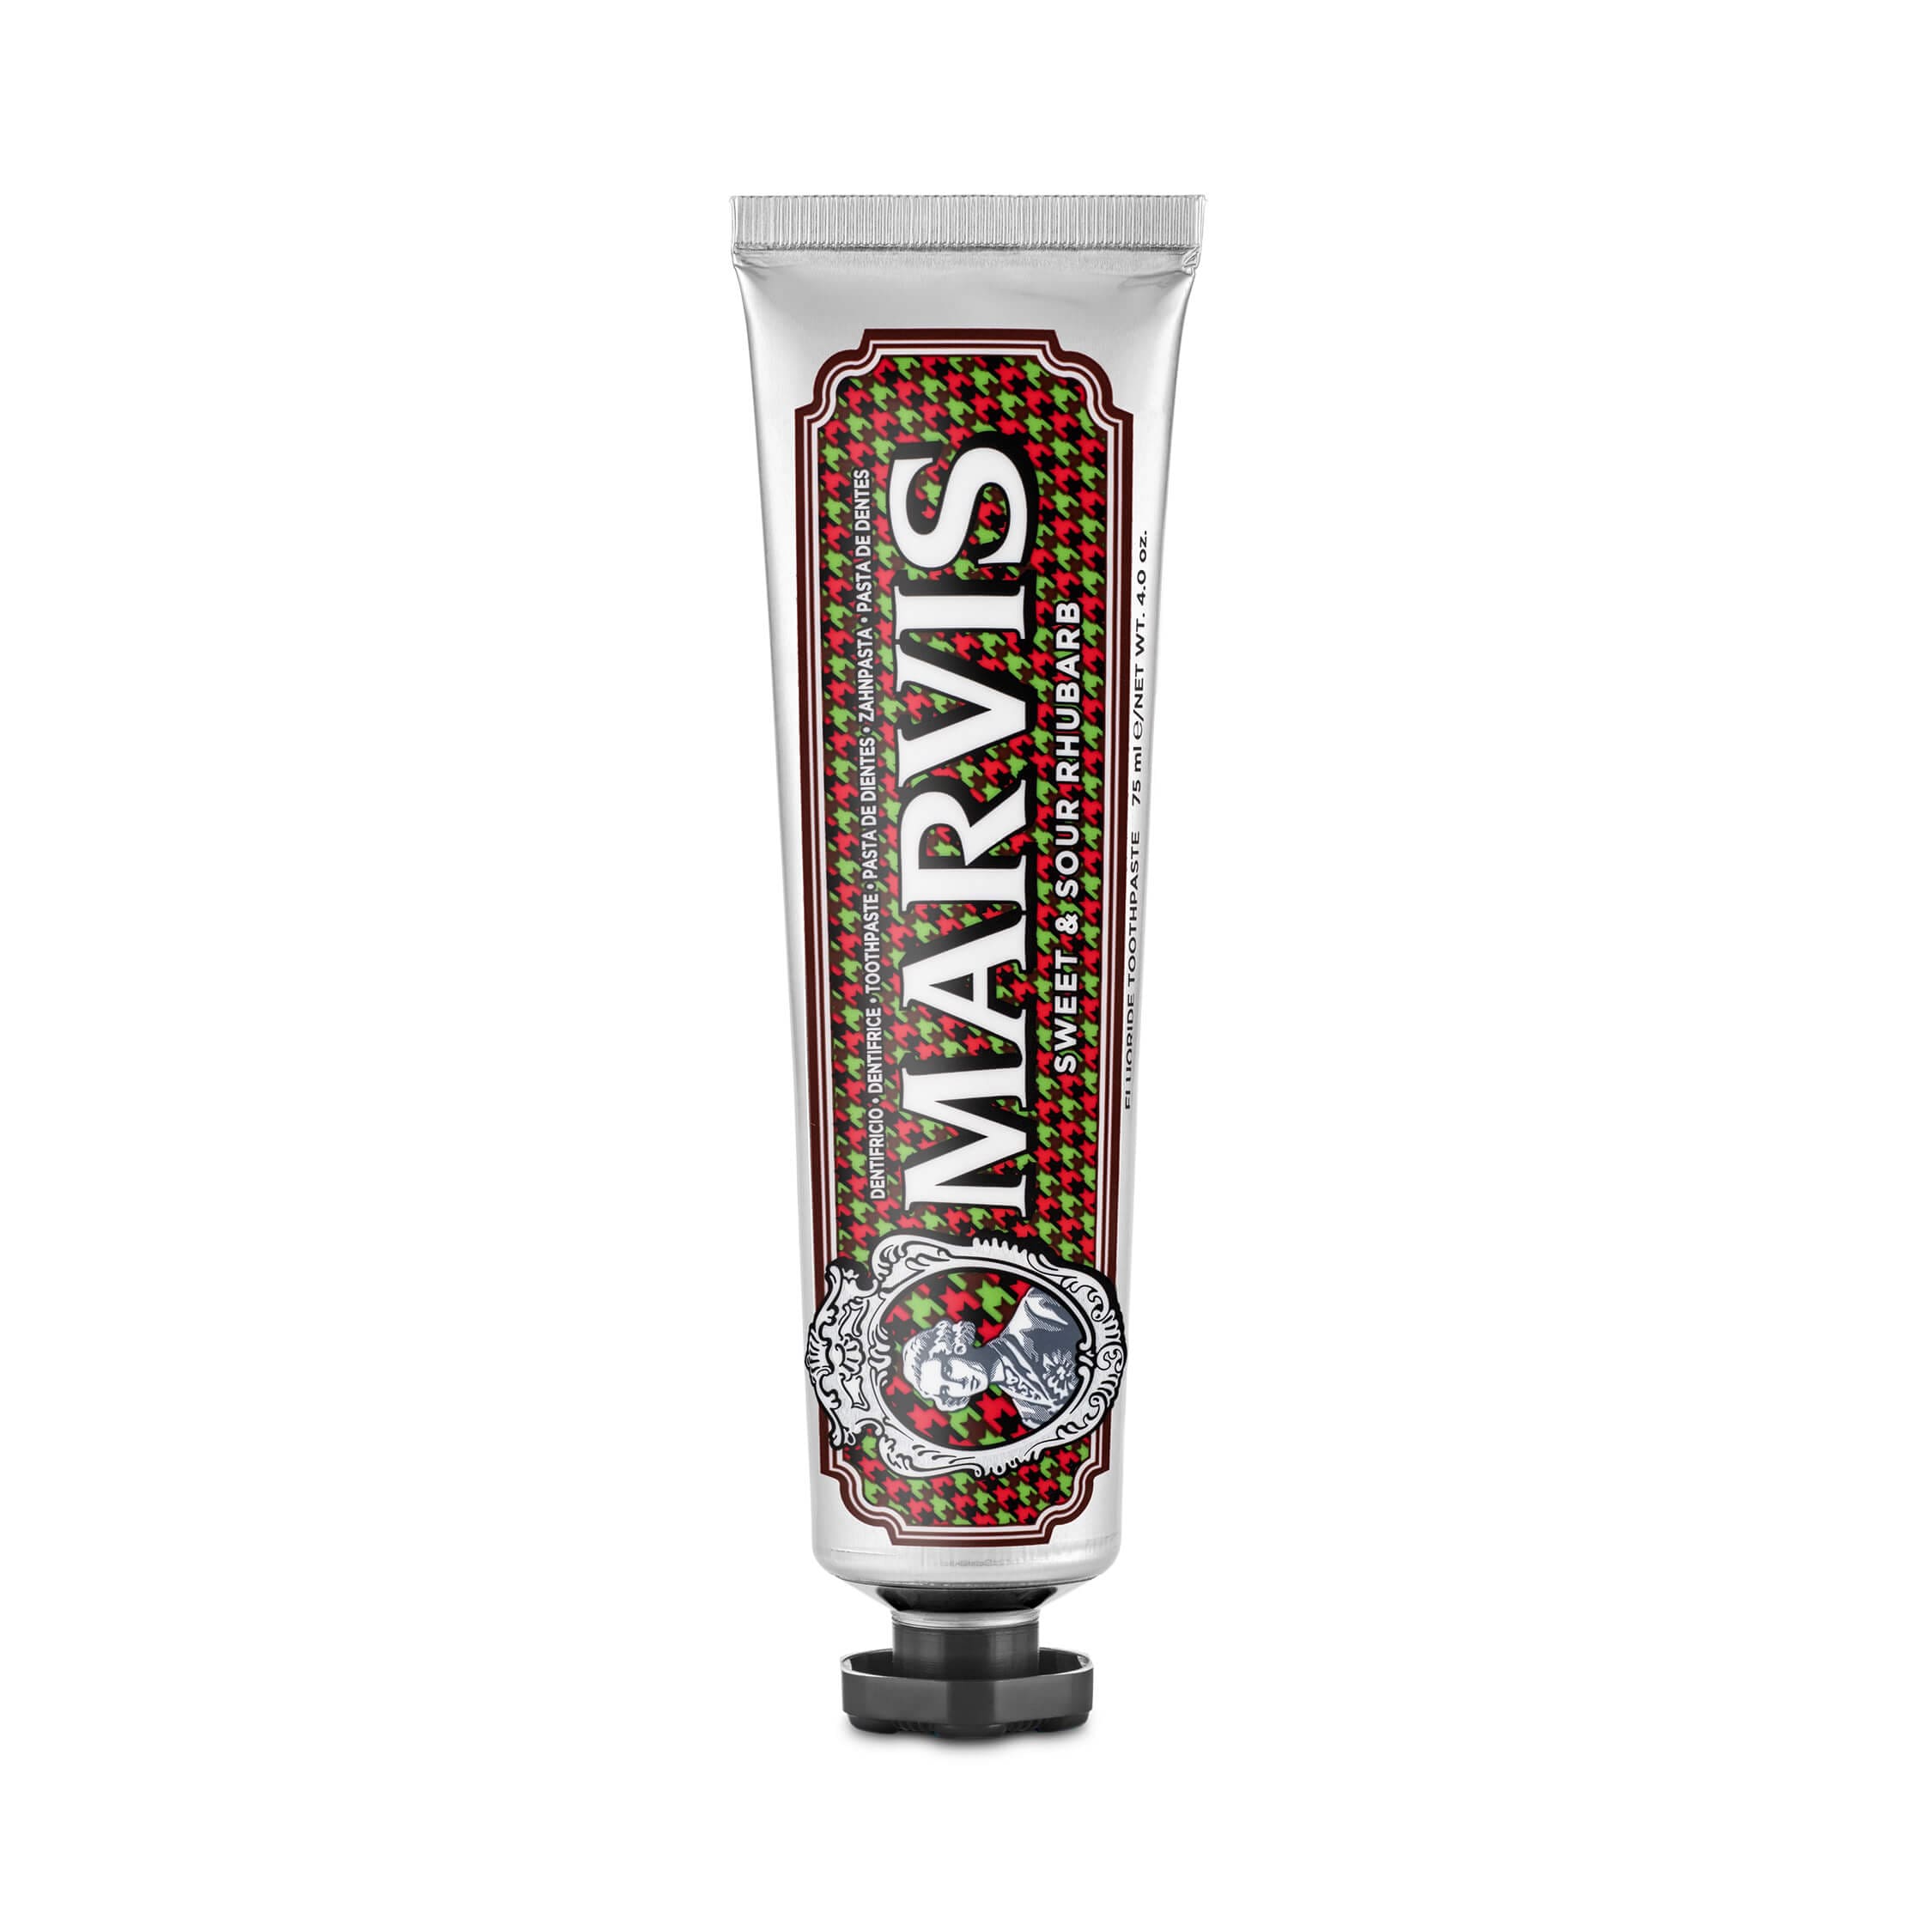 Marvis Sweet & Sour Rhubarb Toothpaste 75ml